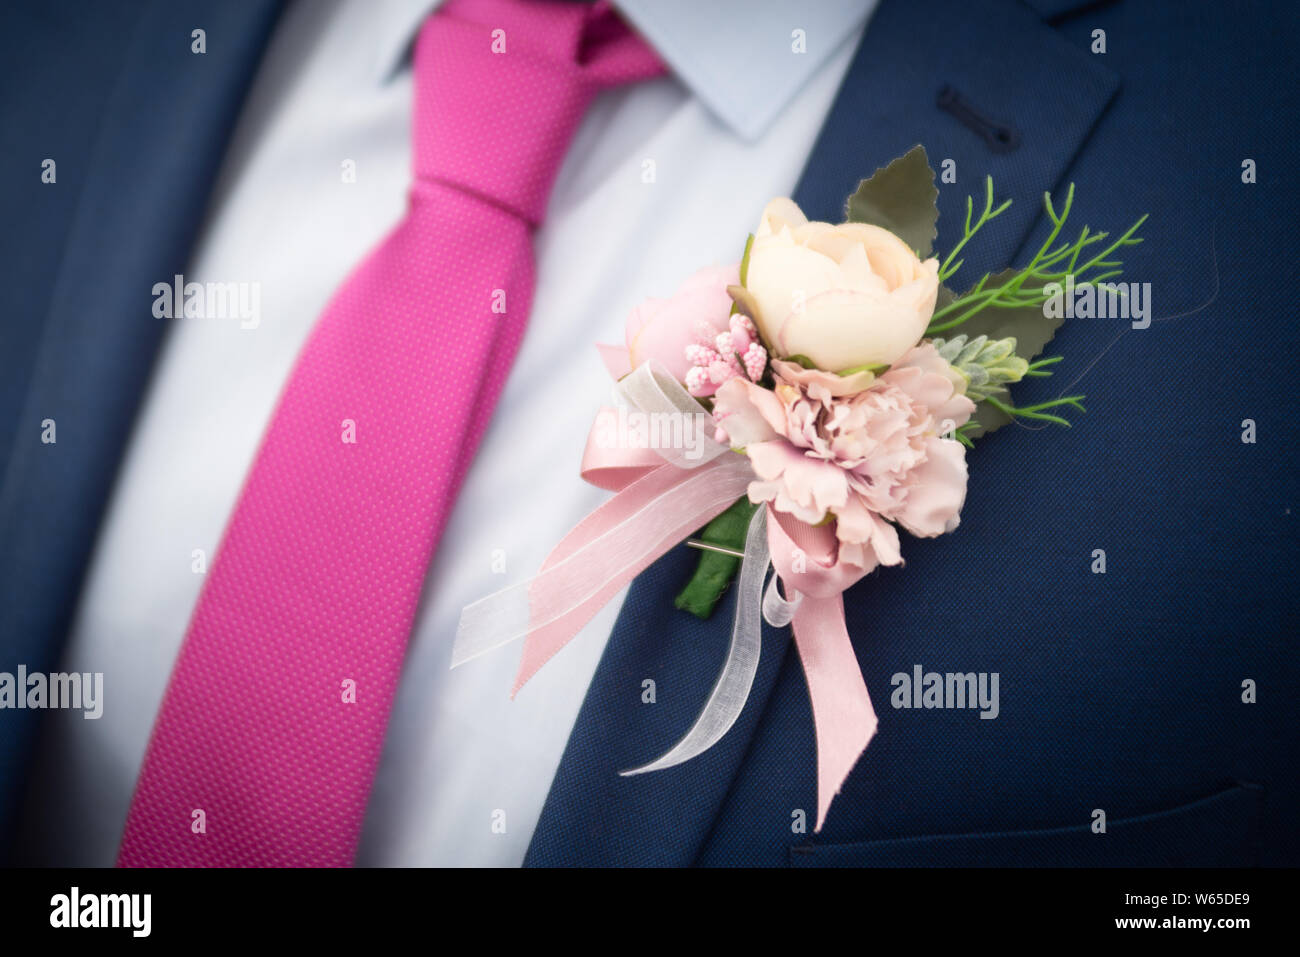 wedding photography Stock Photo